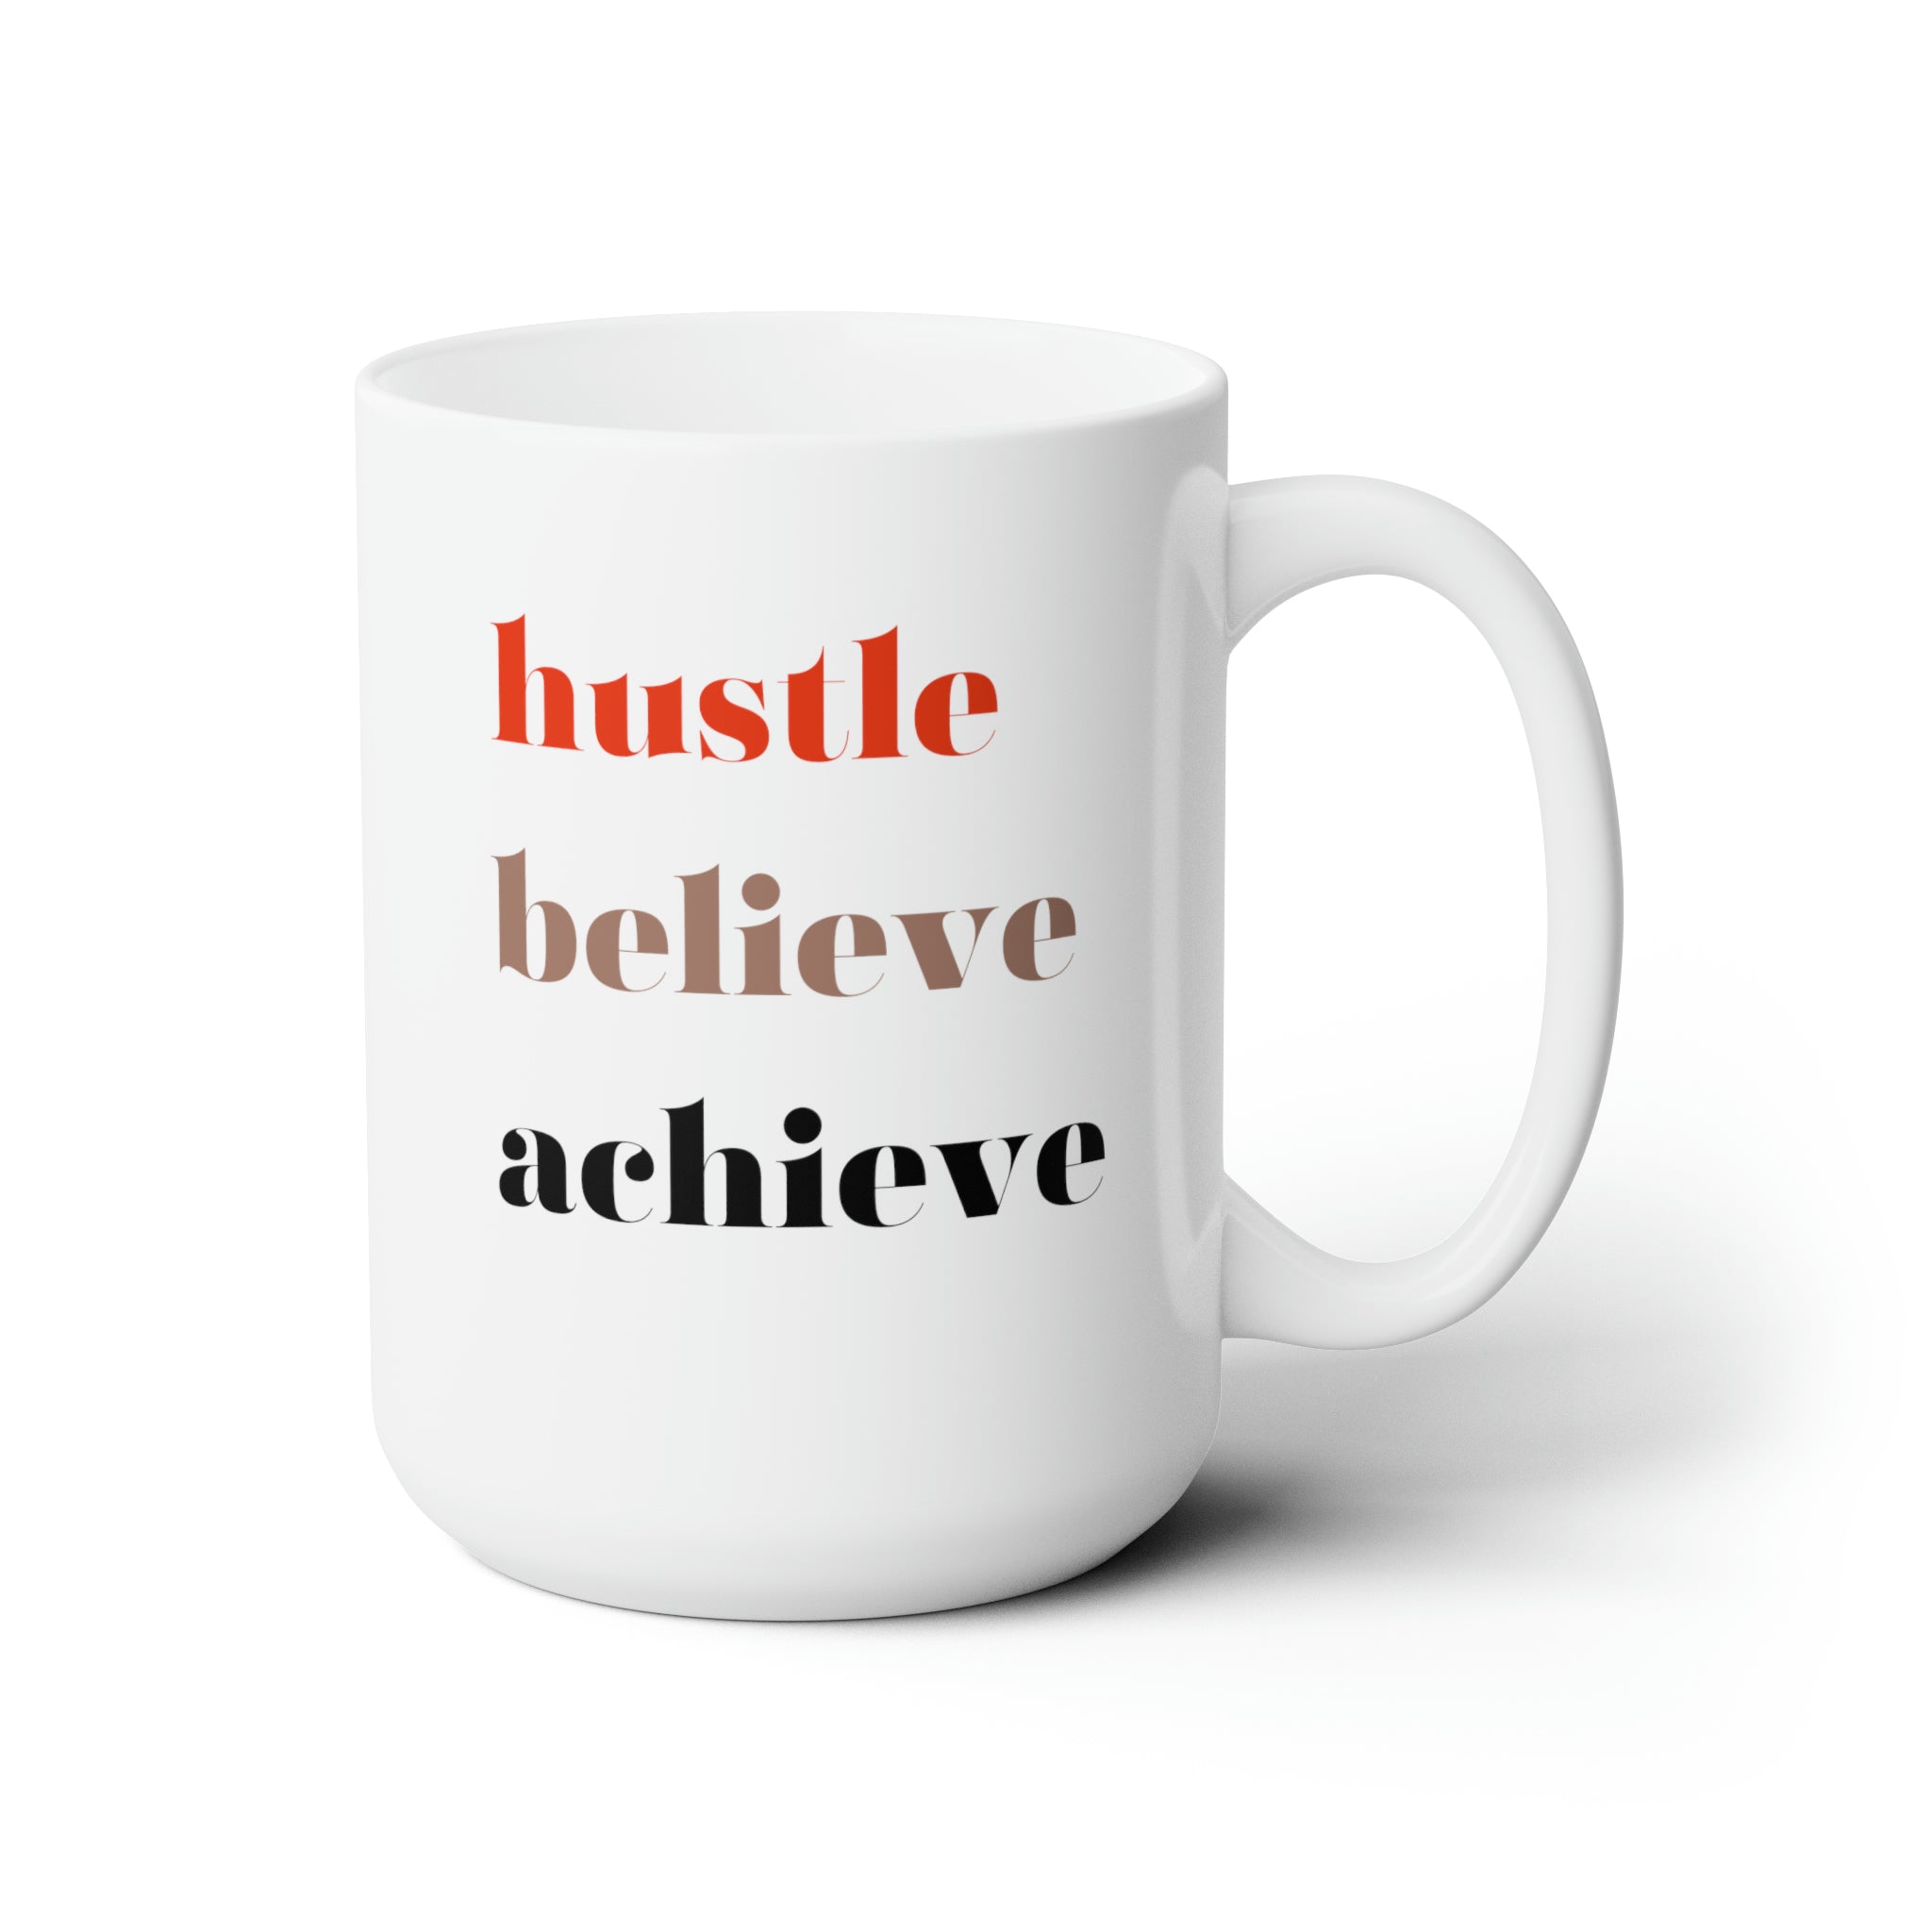 hustle believe achieve aspirational motivational mug from Lindsay Albane